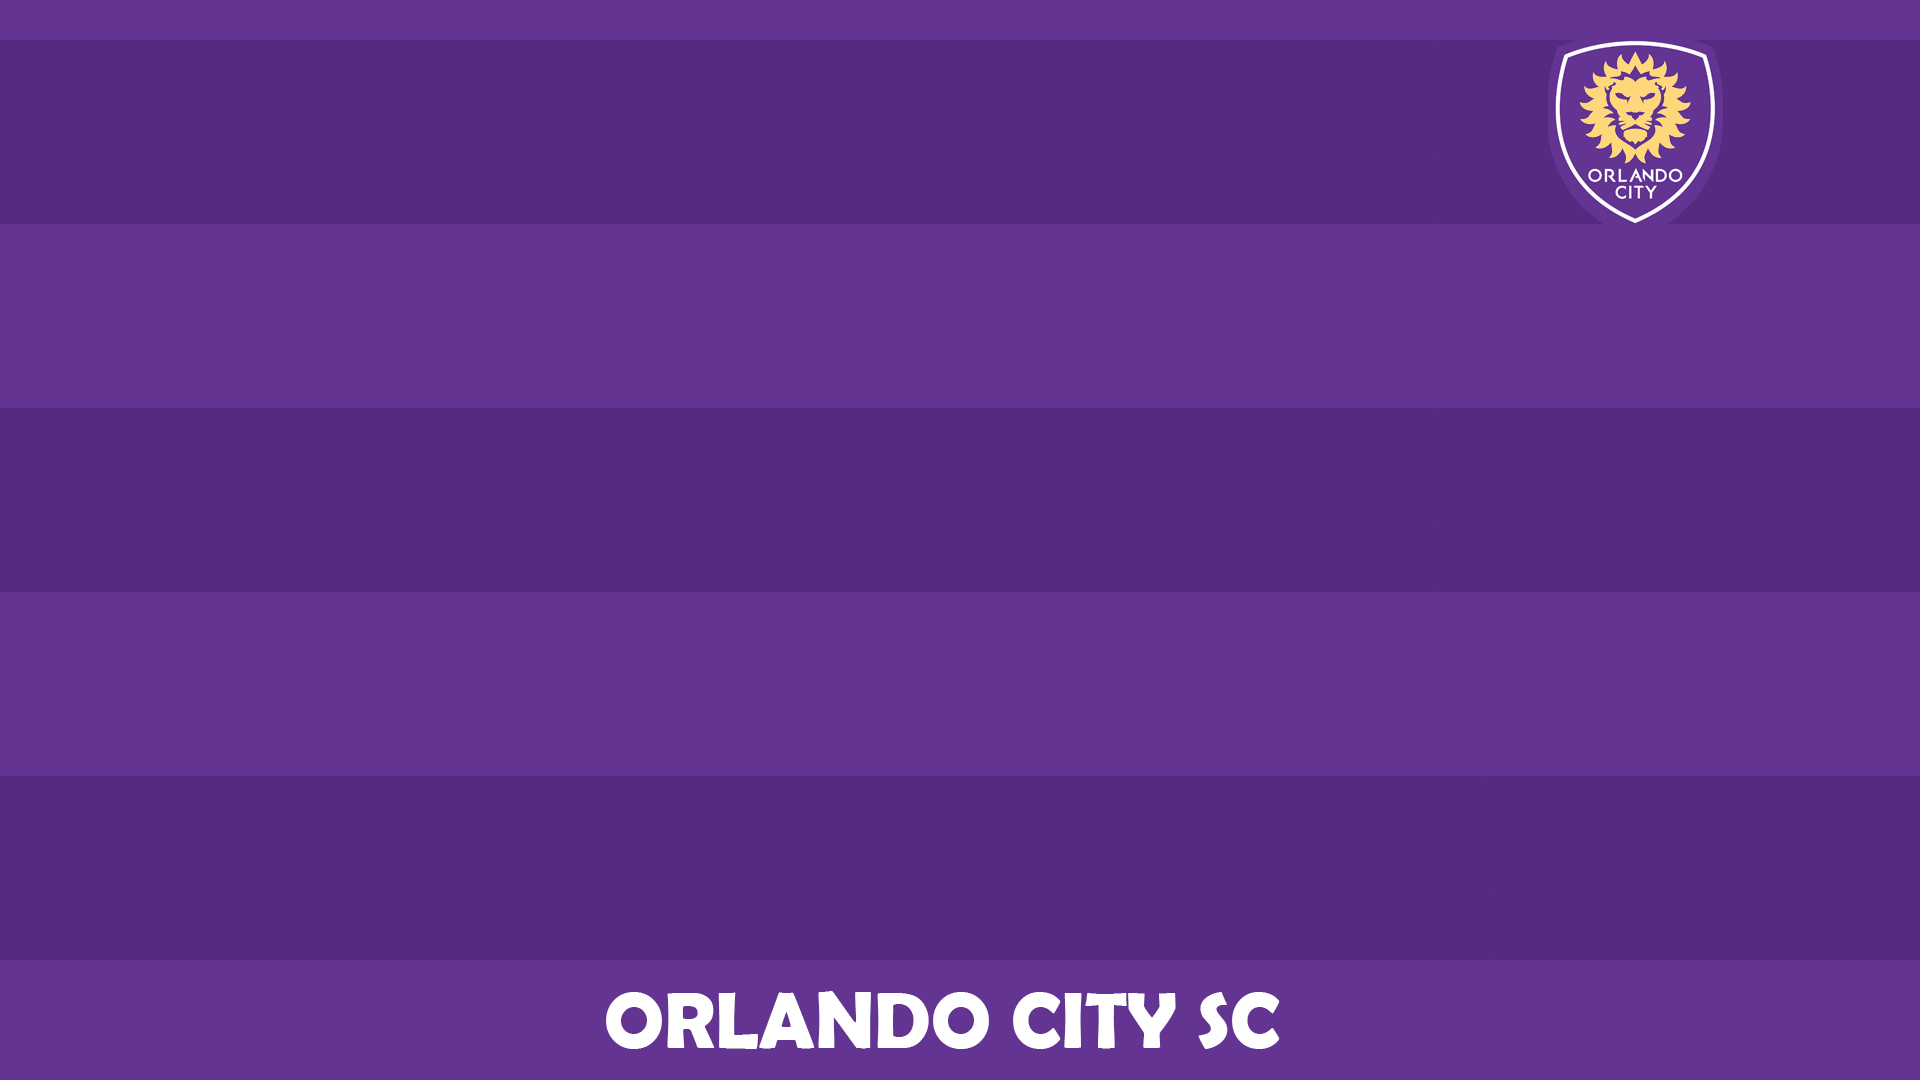 48 Orlando City IPhone Wallpaper HD Orlando City IPhone